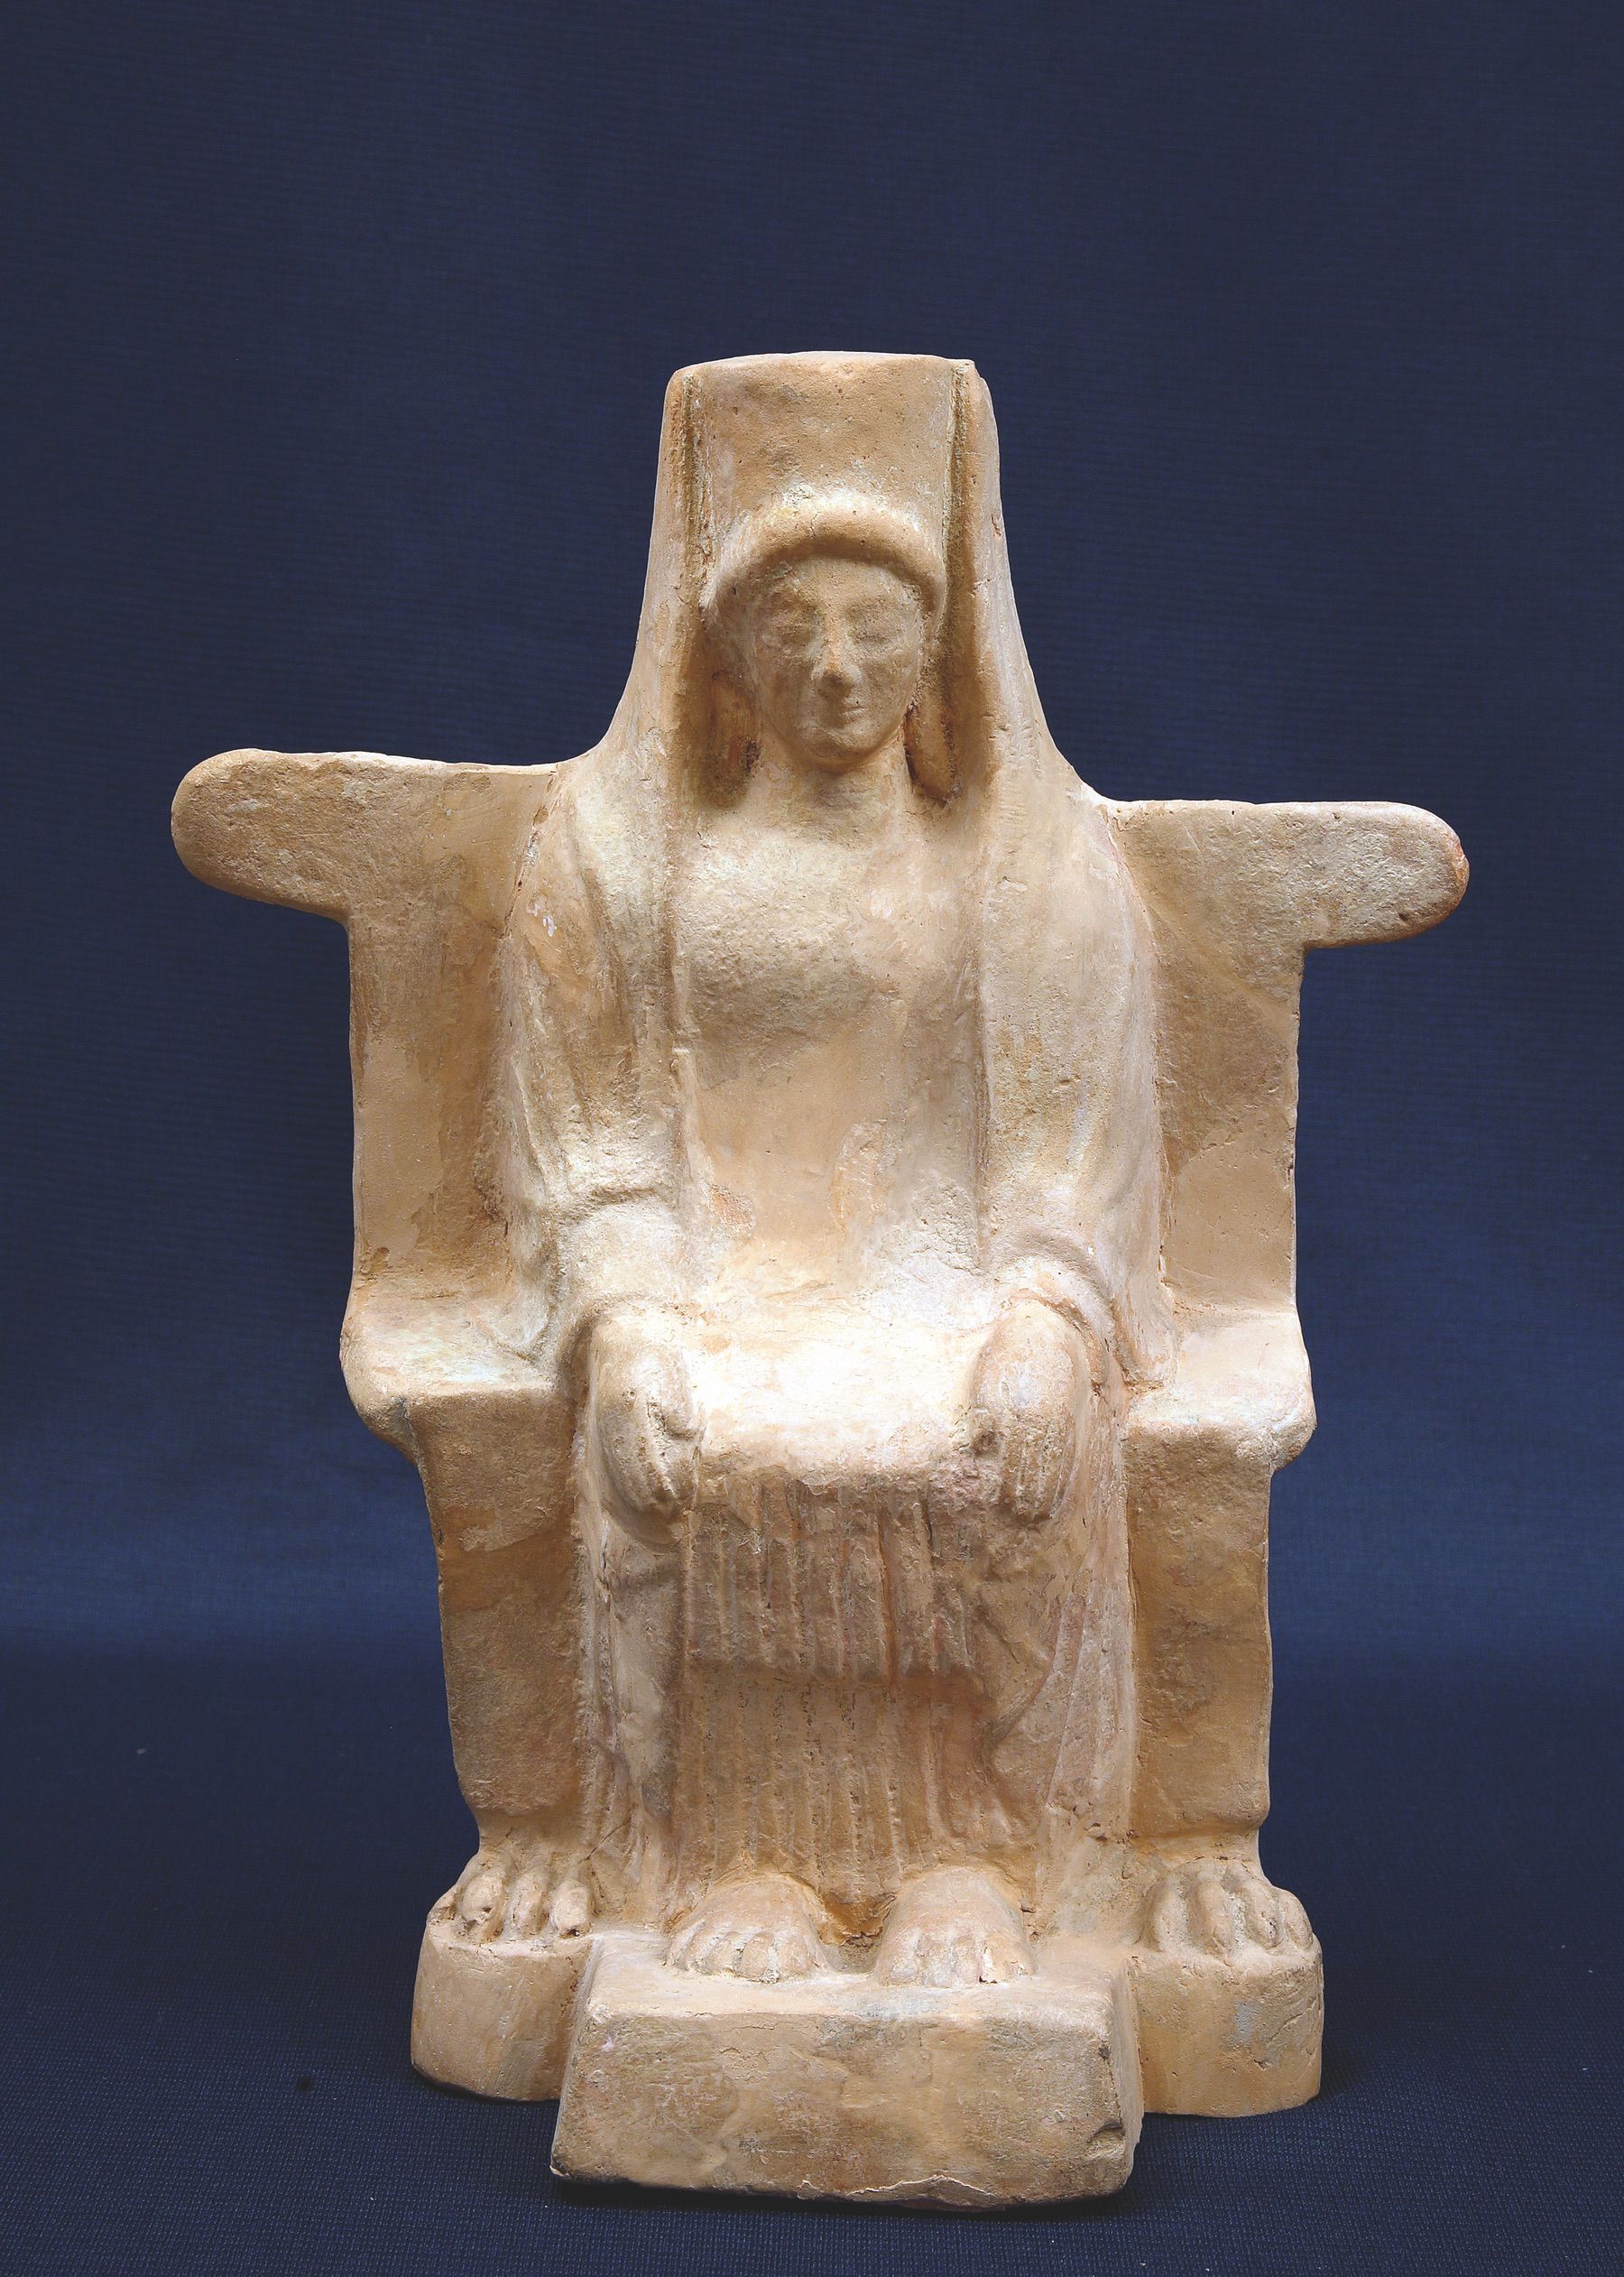 36. Figura femminile in trono. Da Selinunet. V sec.a.C.